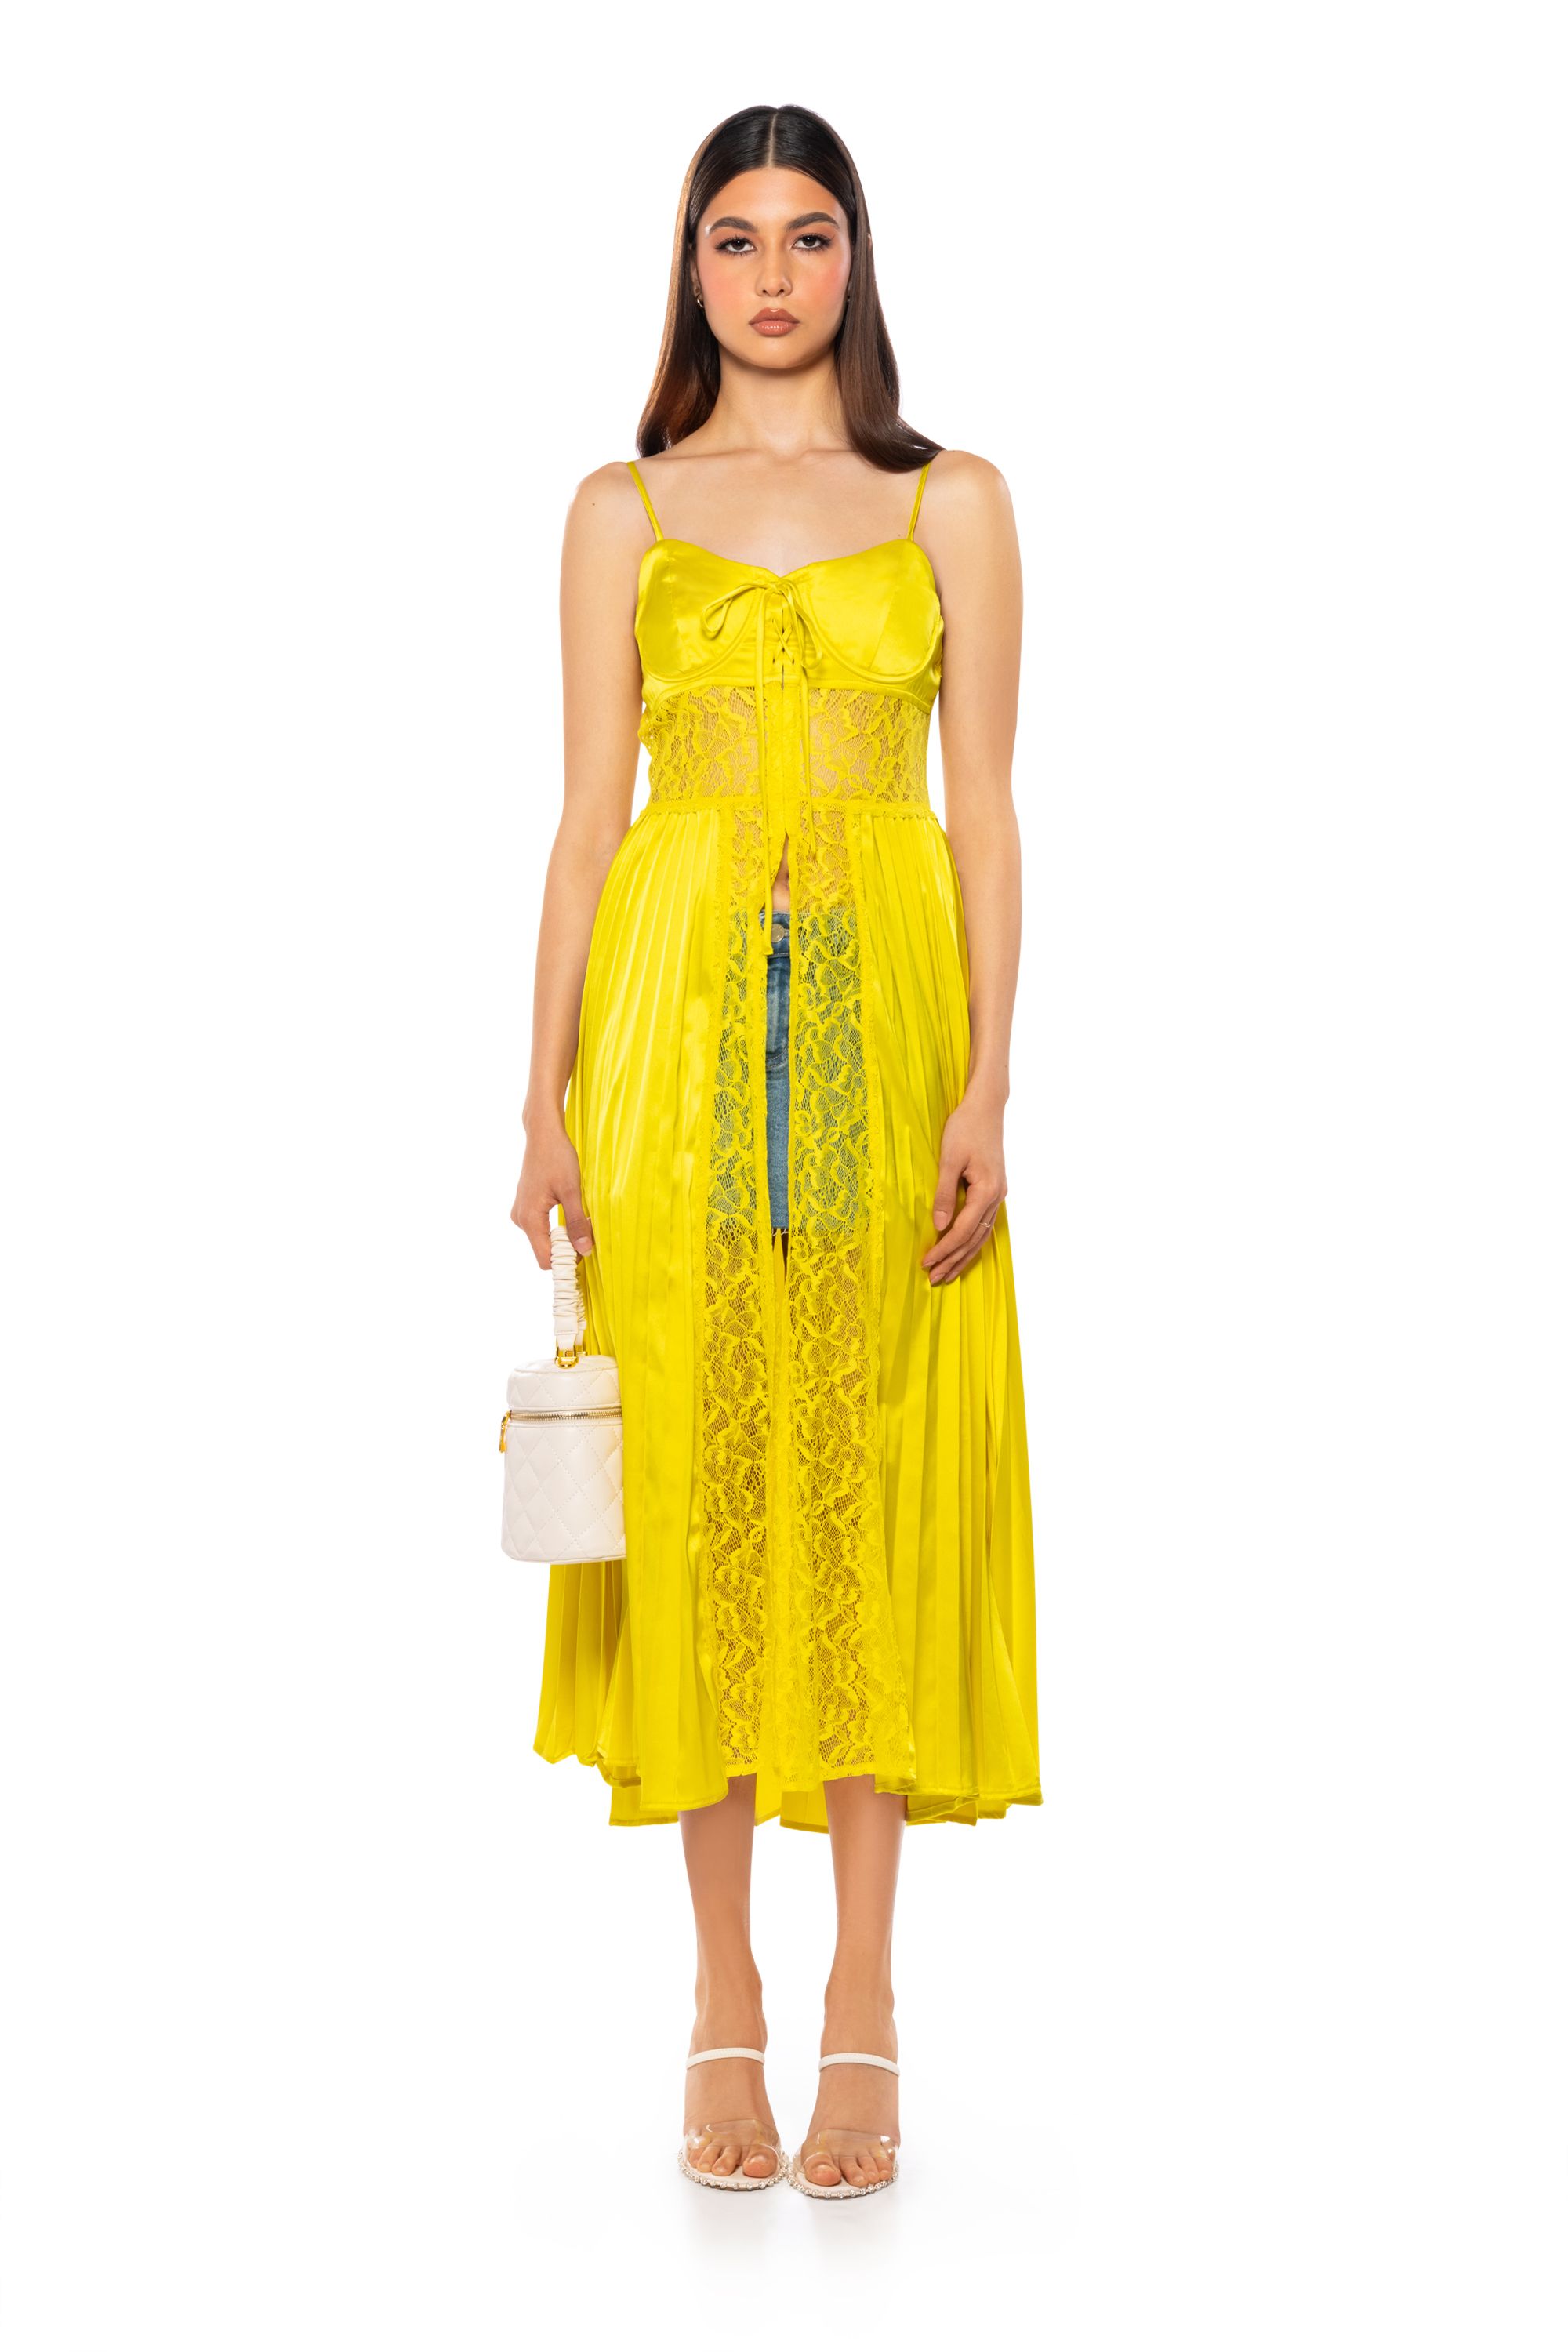 https://www.shopakira.com/media/catalog/product/cache/2fe4d03ca6777fca30f422575217cd53/z/a/zane-maxi-corset-top-in-yellow_yellow_5_5.jpg